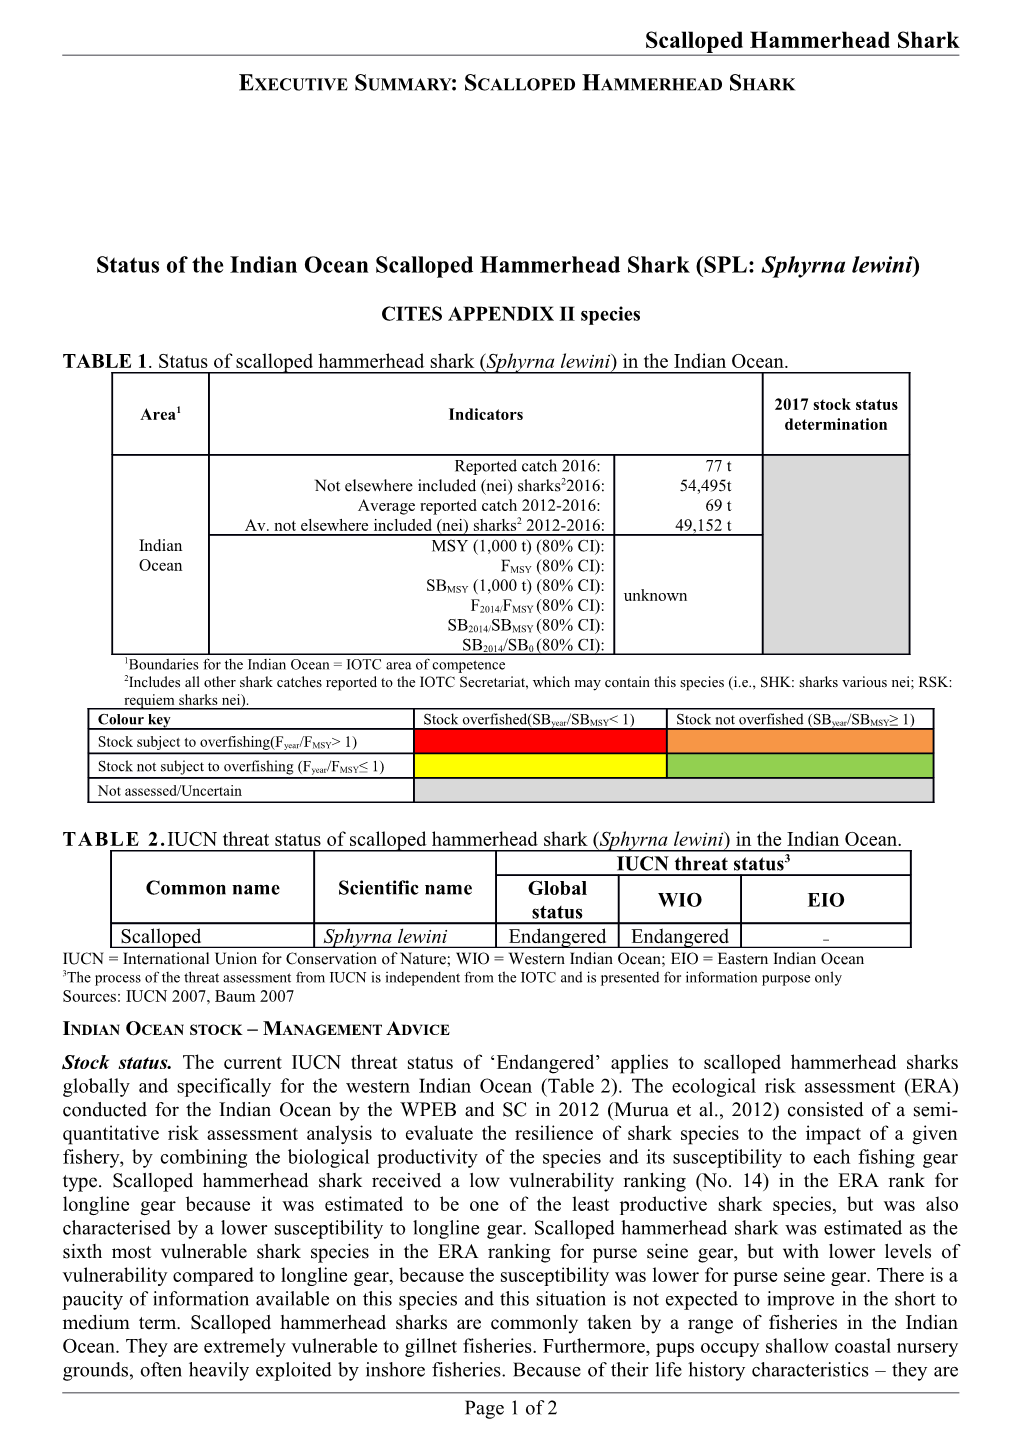 Status of the Indian Ocean Scalloped Hammerhead Shark (SPL: Sphyrna Lewini)